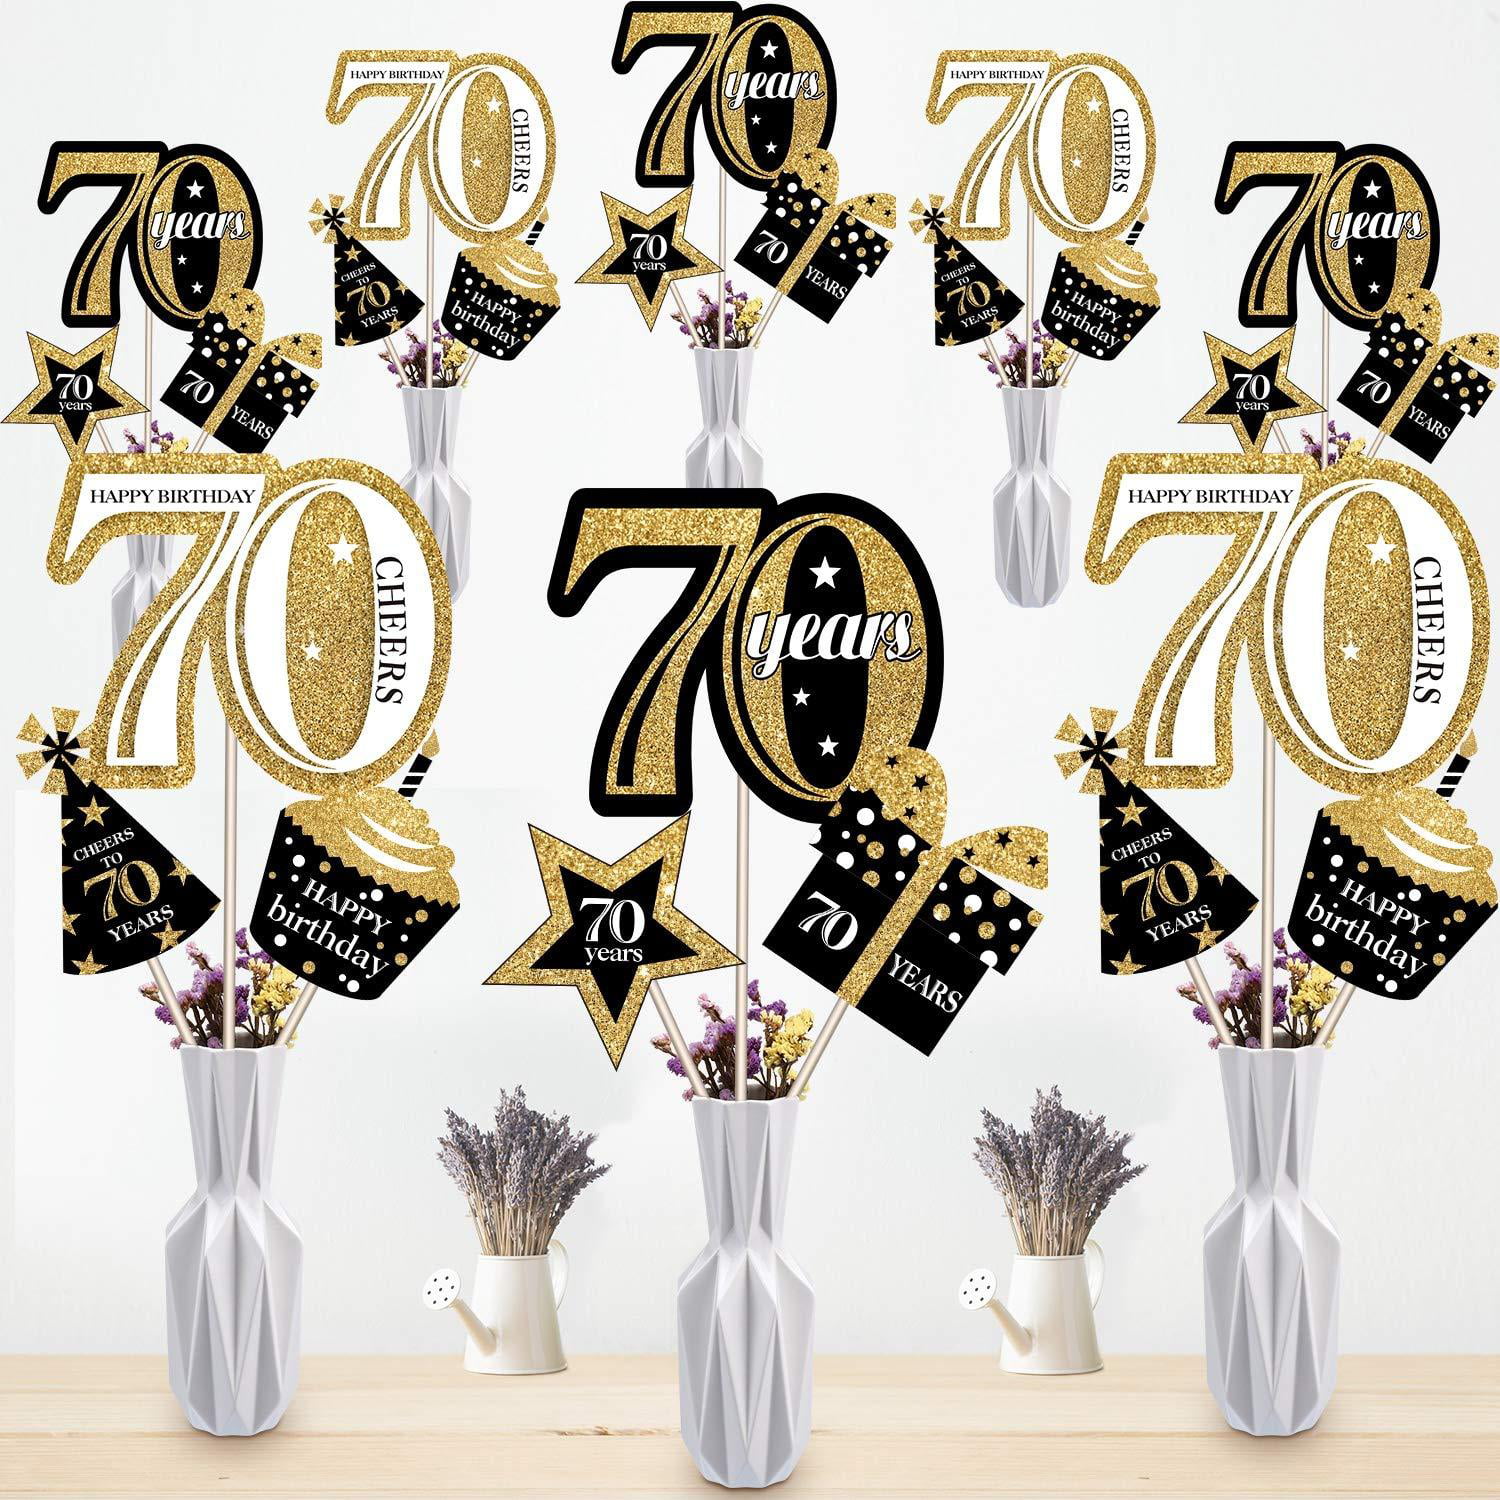 blulu-70th-birthday-party-decoration-set-golden-birthday-party